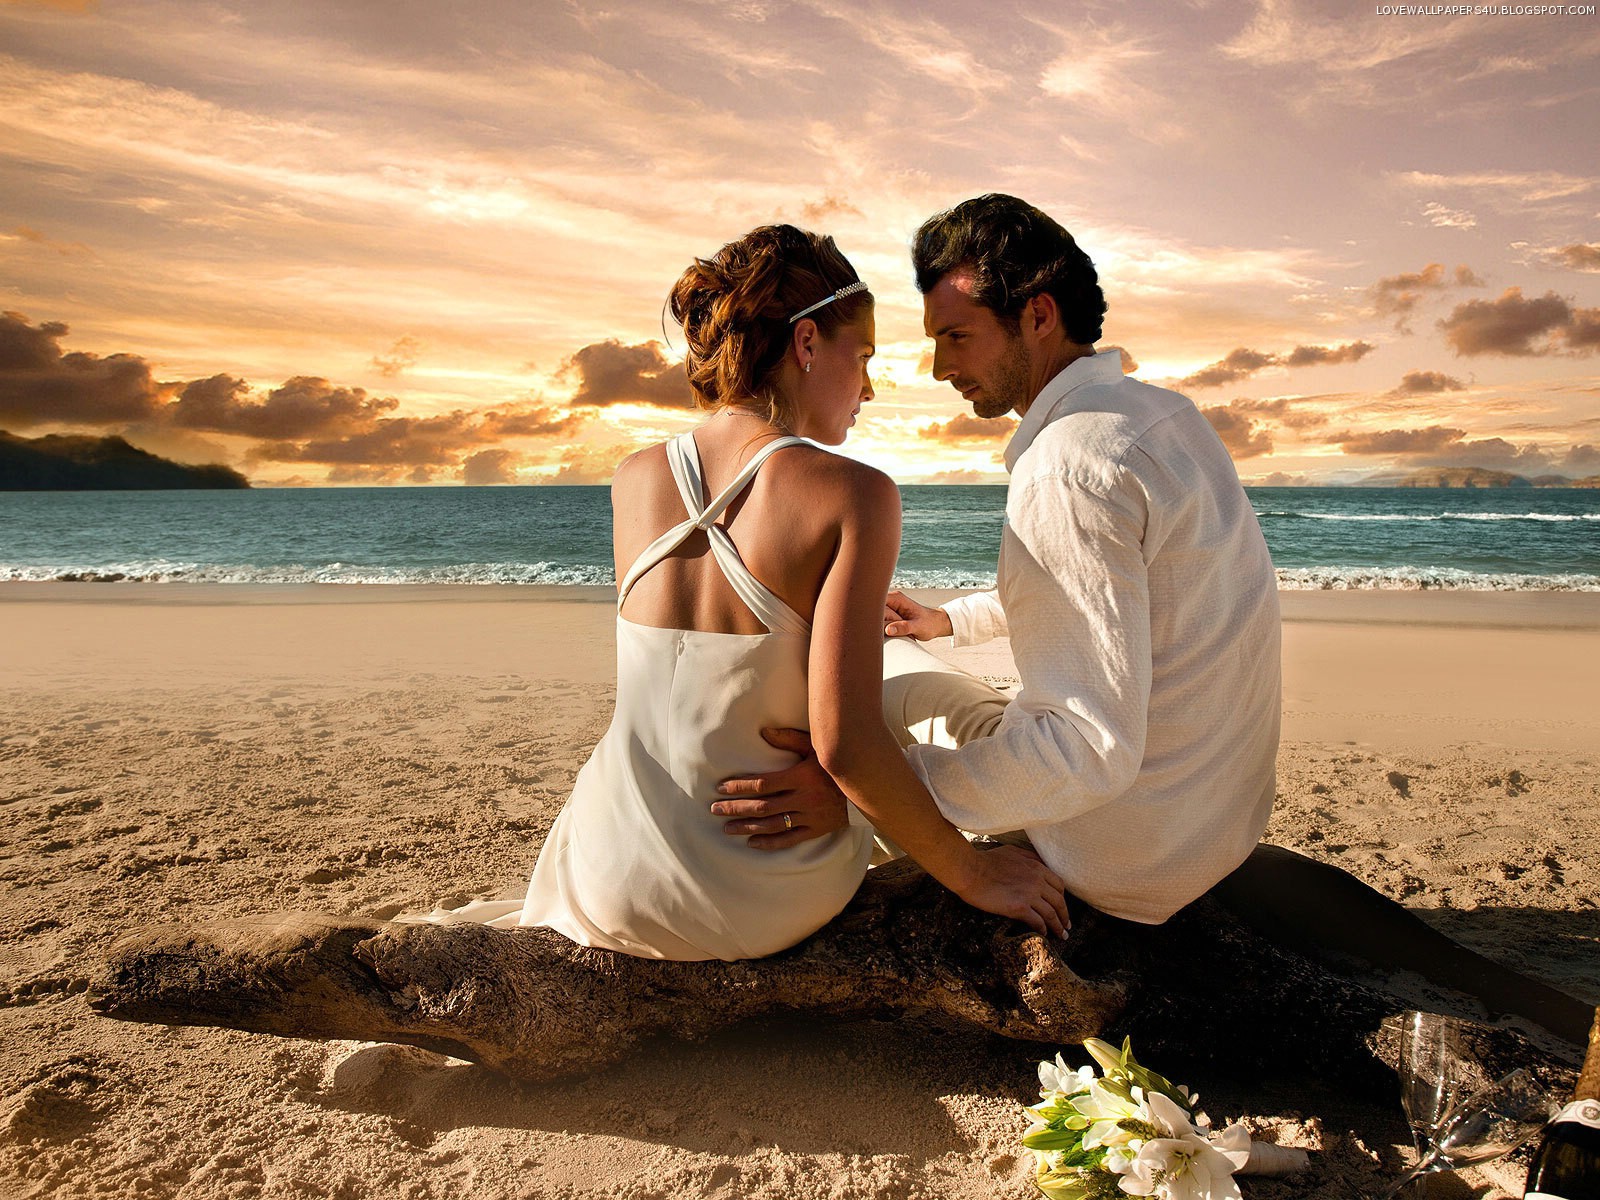 Couple In Love Picture Wallpaper Romantic Stock